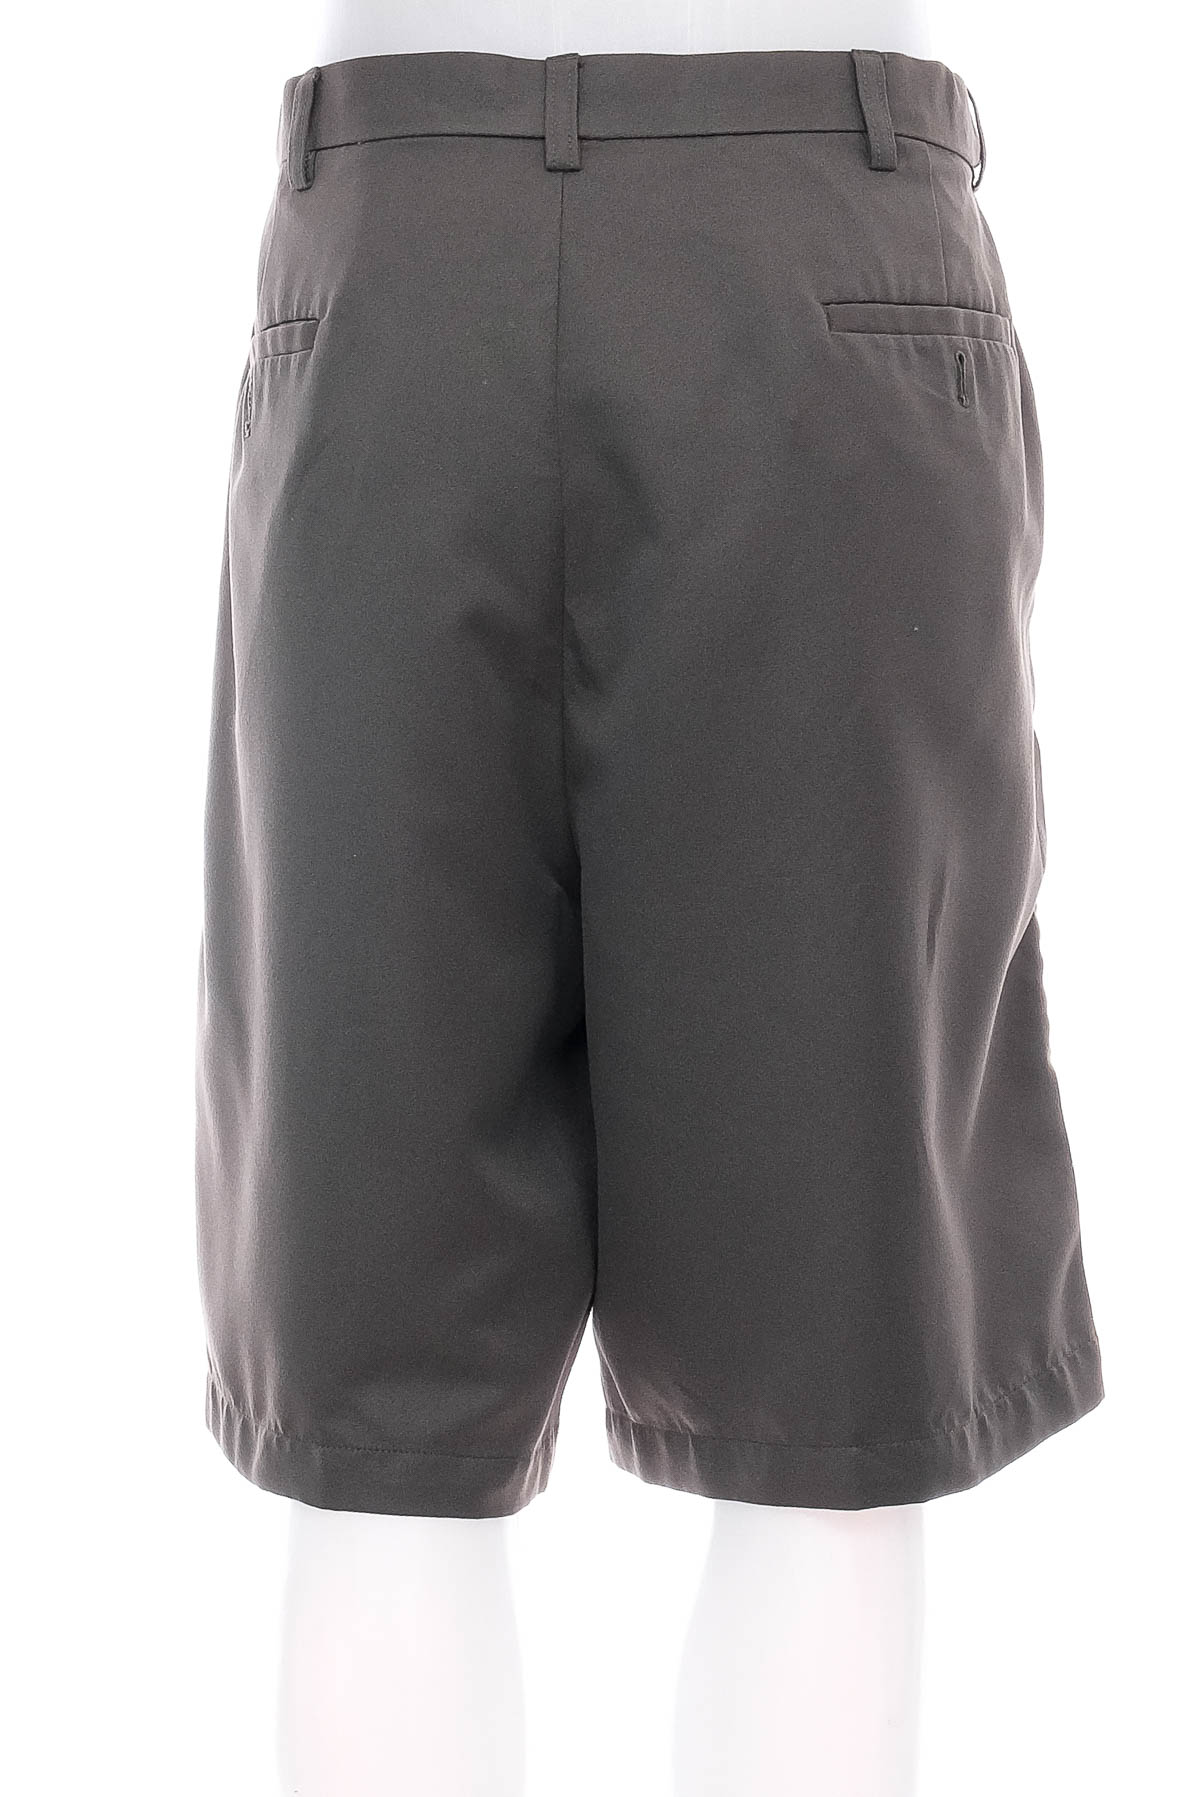 Men's shorts - Haggar - 1